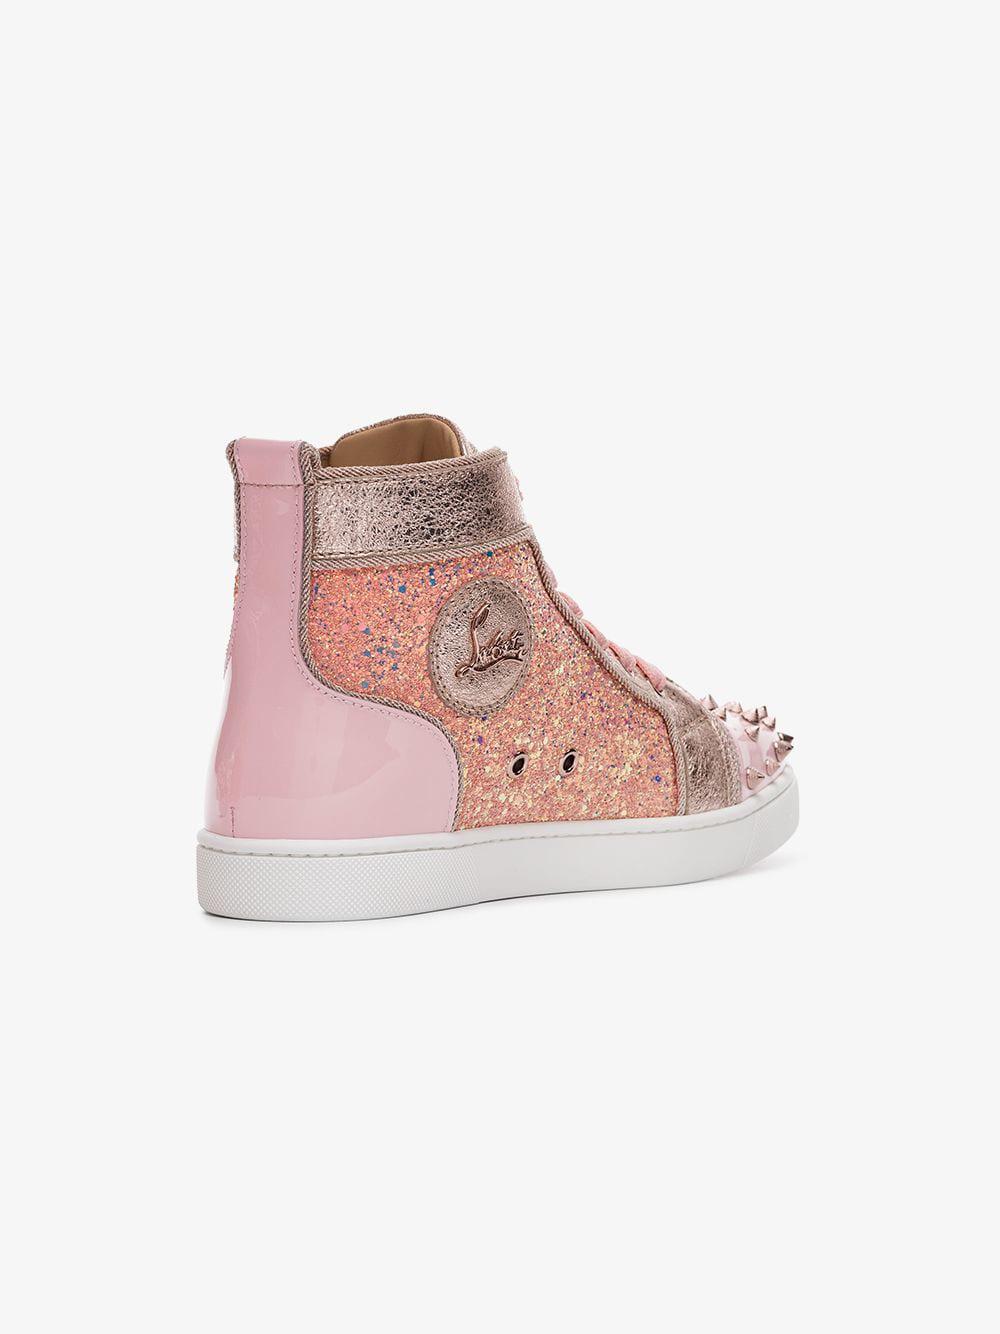 CHRISTIAN LOUBOUTIN Lou Degra Spikes Flat Glitter Pink Sneakers Size 37.5  US 7.5